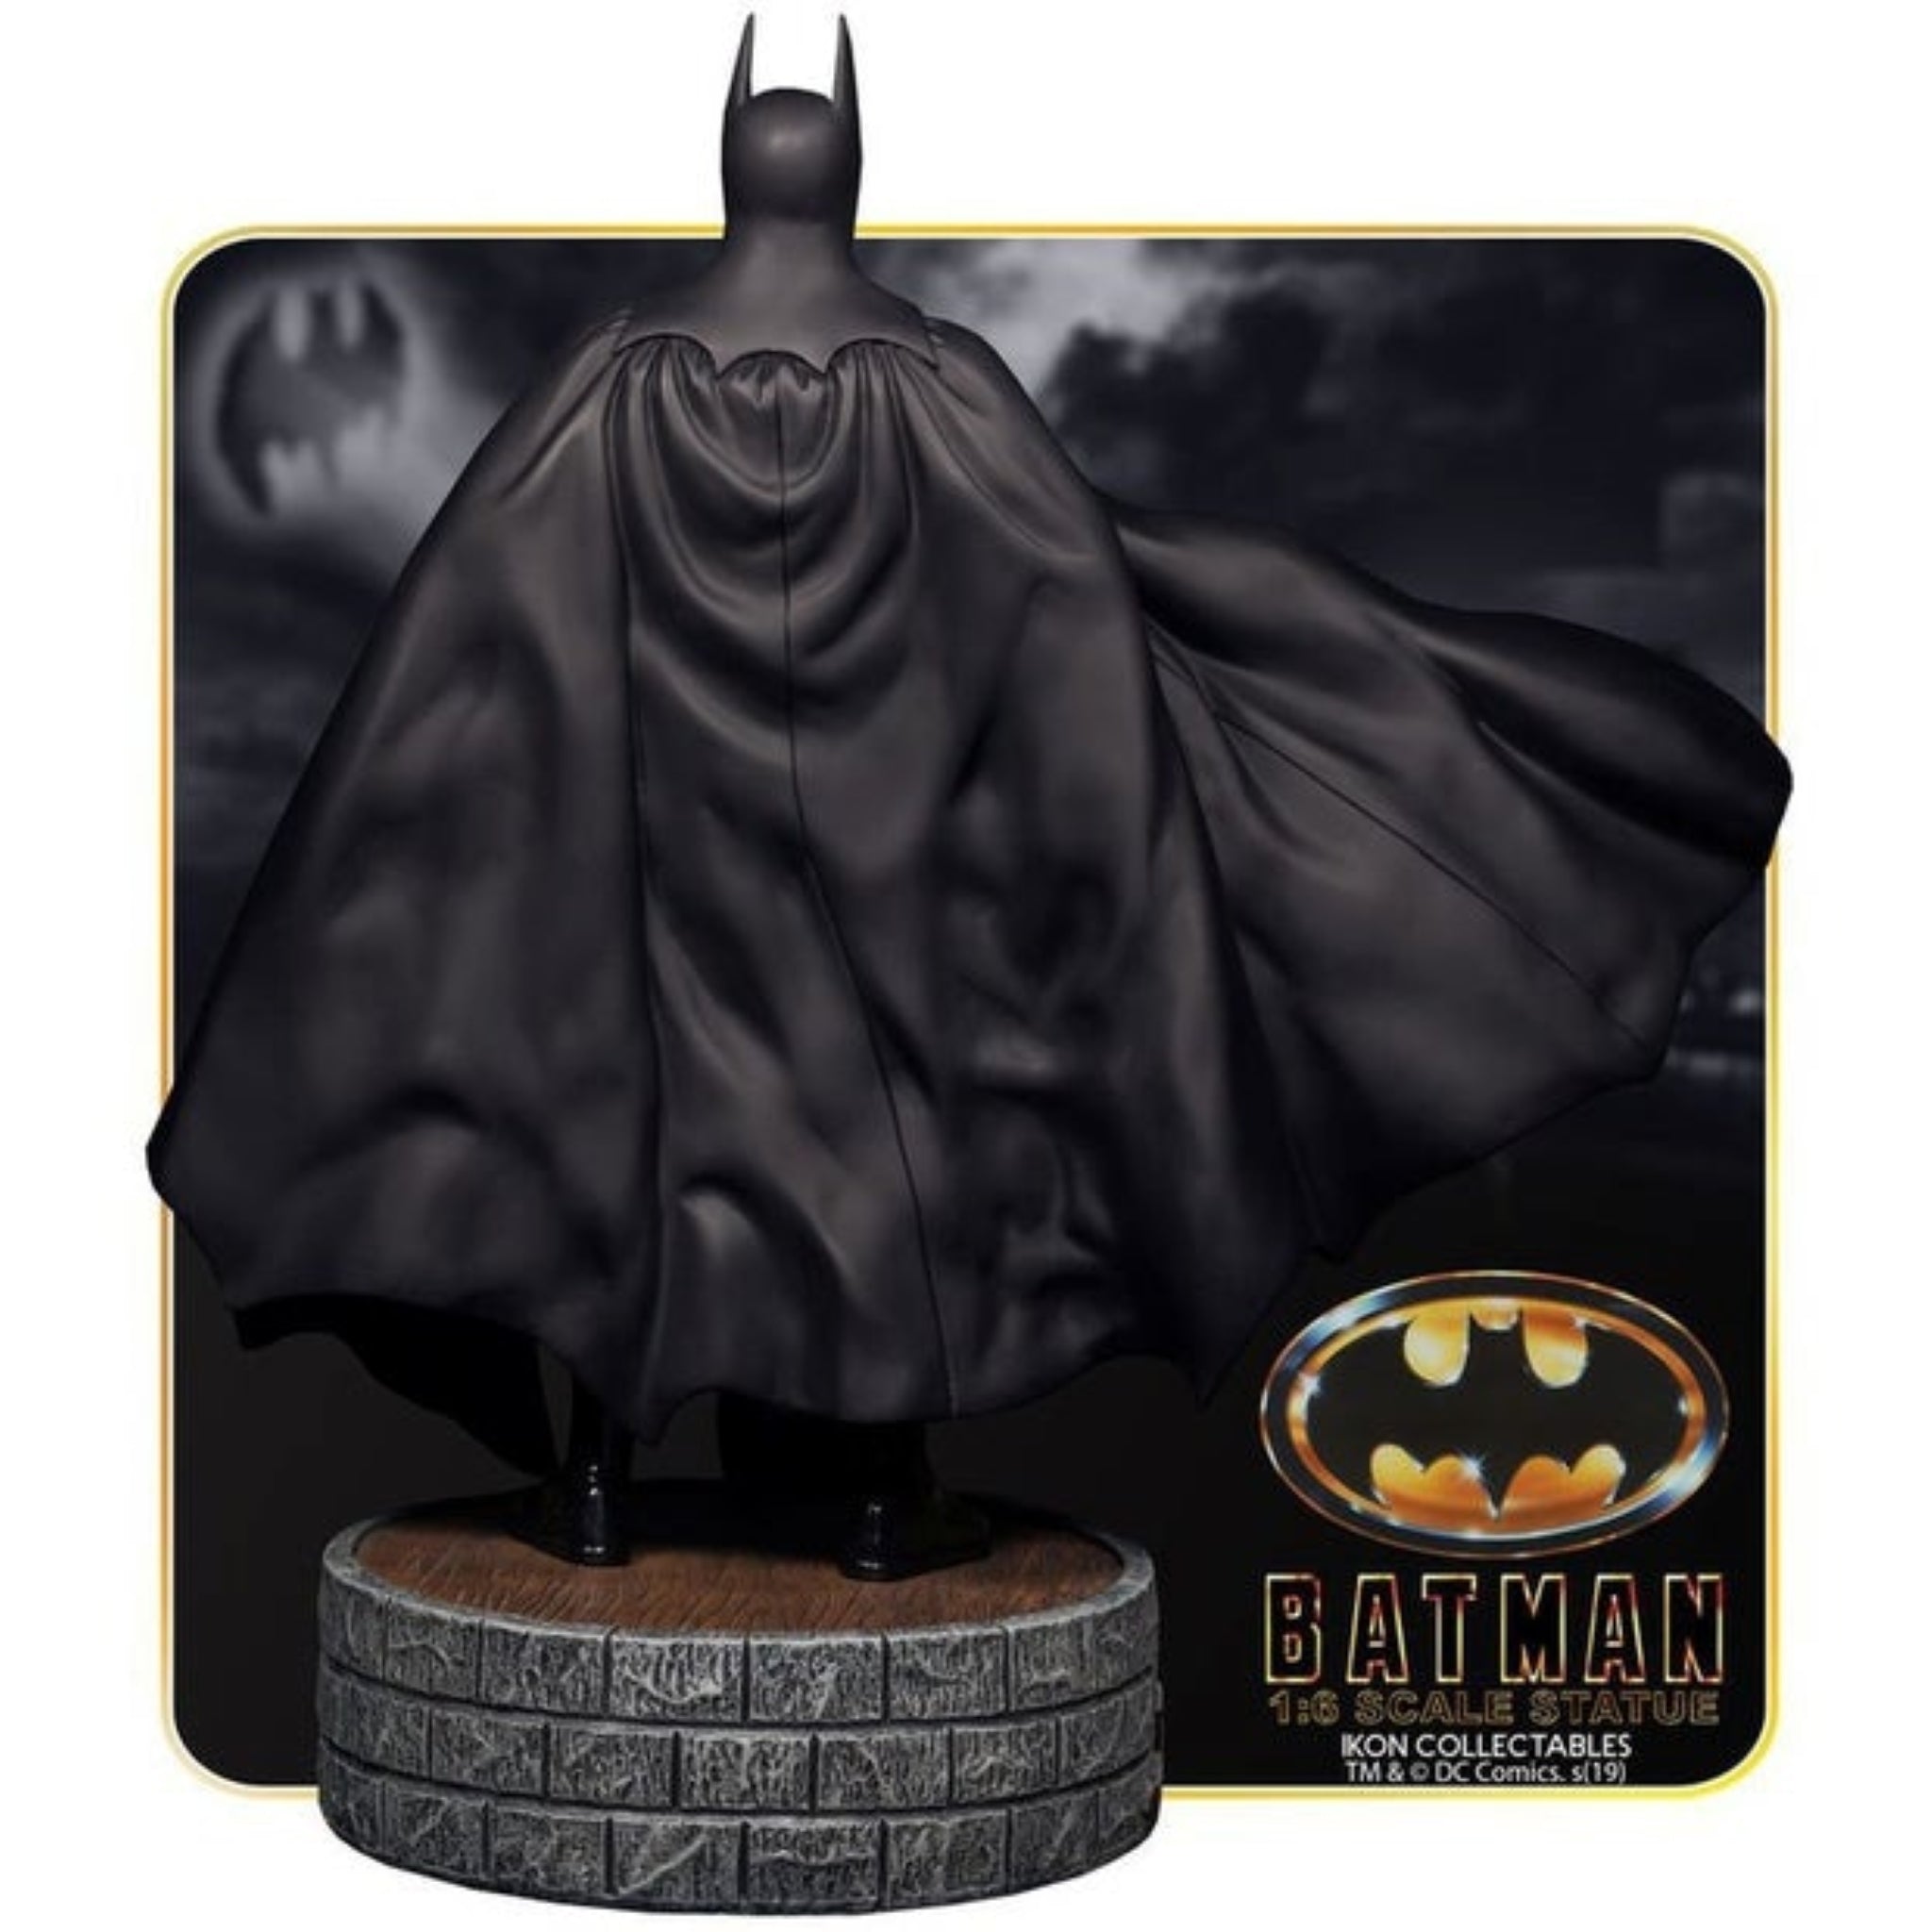 Ikon Collectables Batman (1989) Batman Michael Keaton Statue